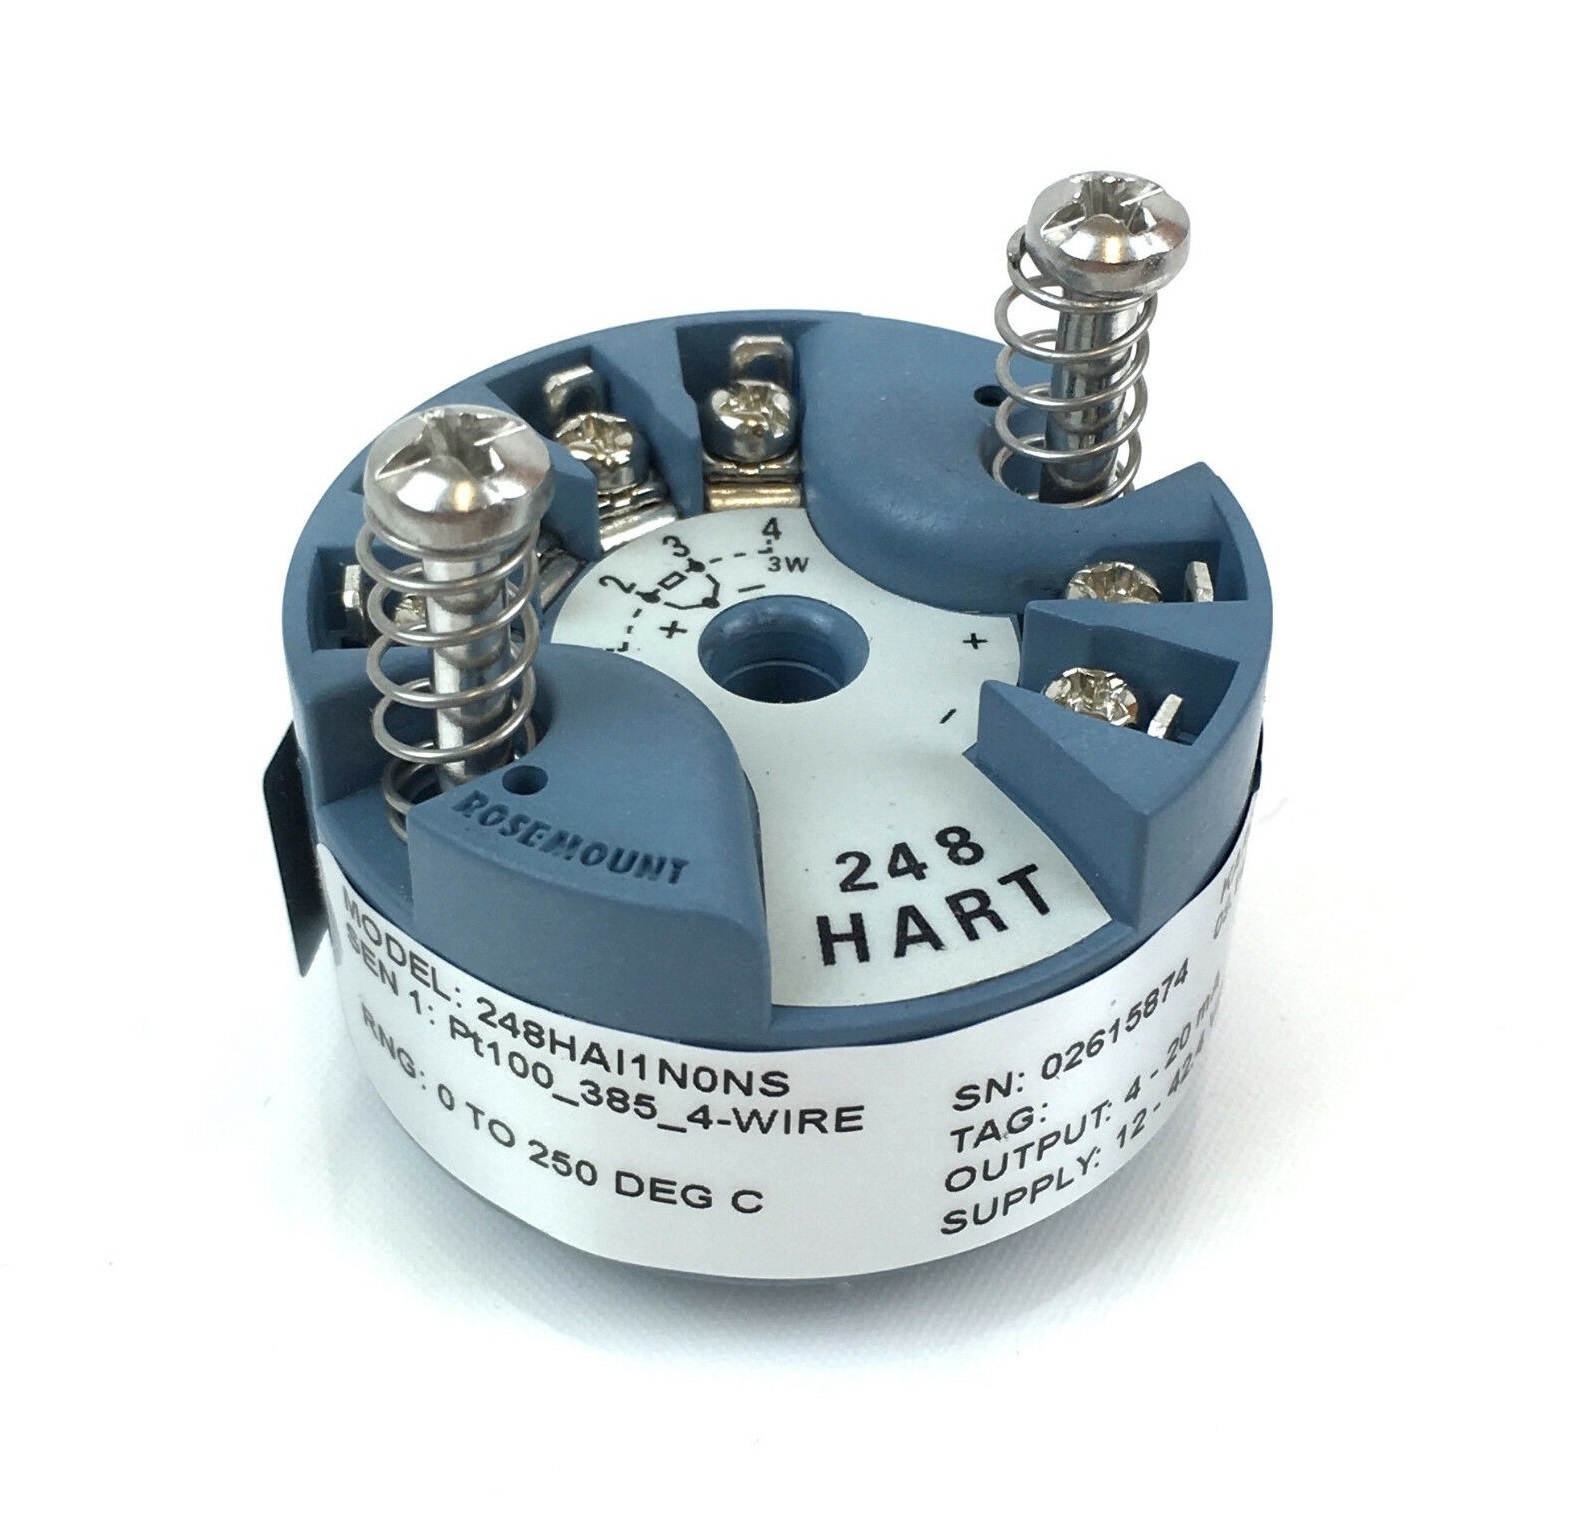 headmount-temp-transmitter-with-hart